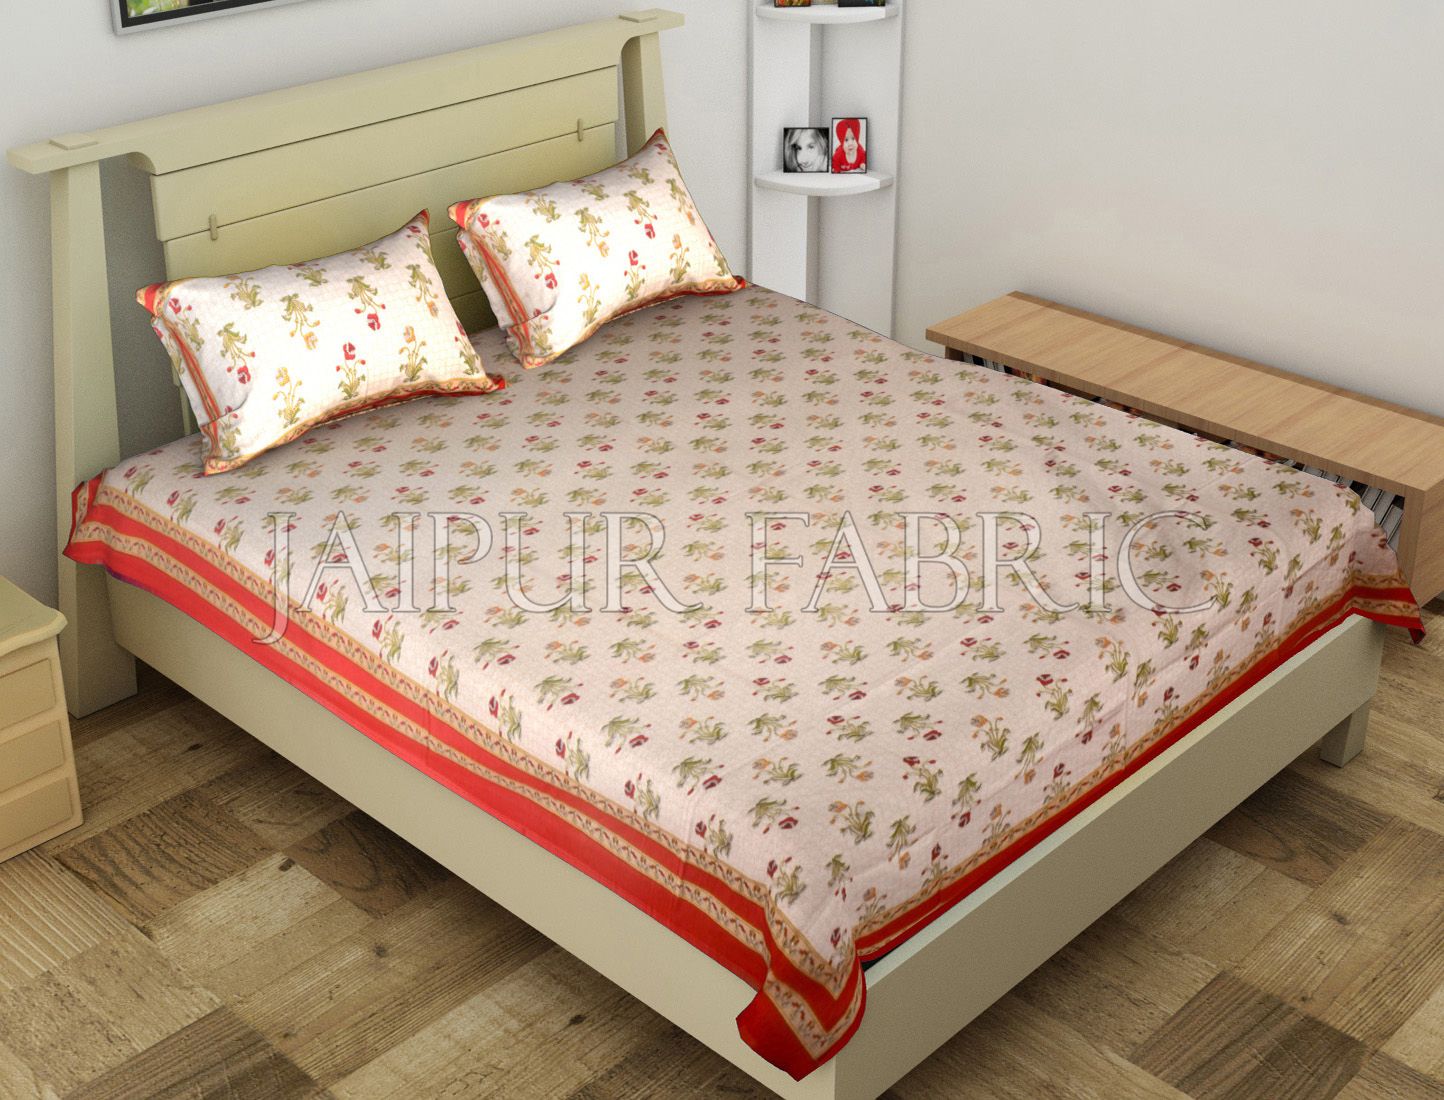 Red Border Trellis Base Floral Printed Cotton Single Bed Sheet